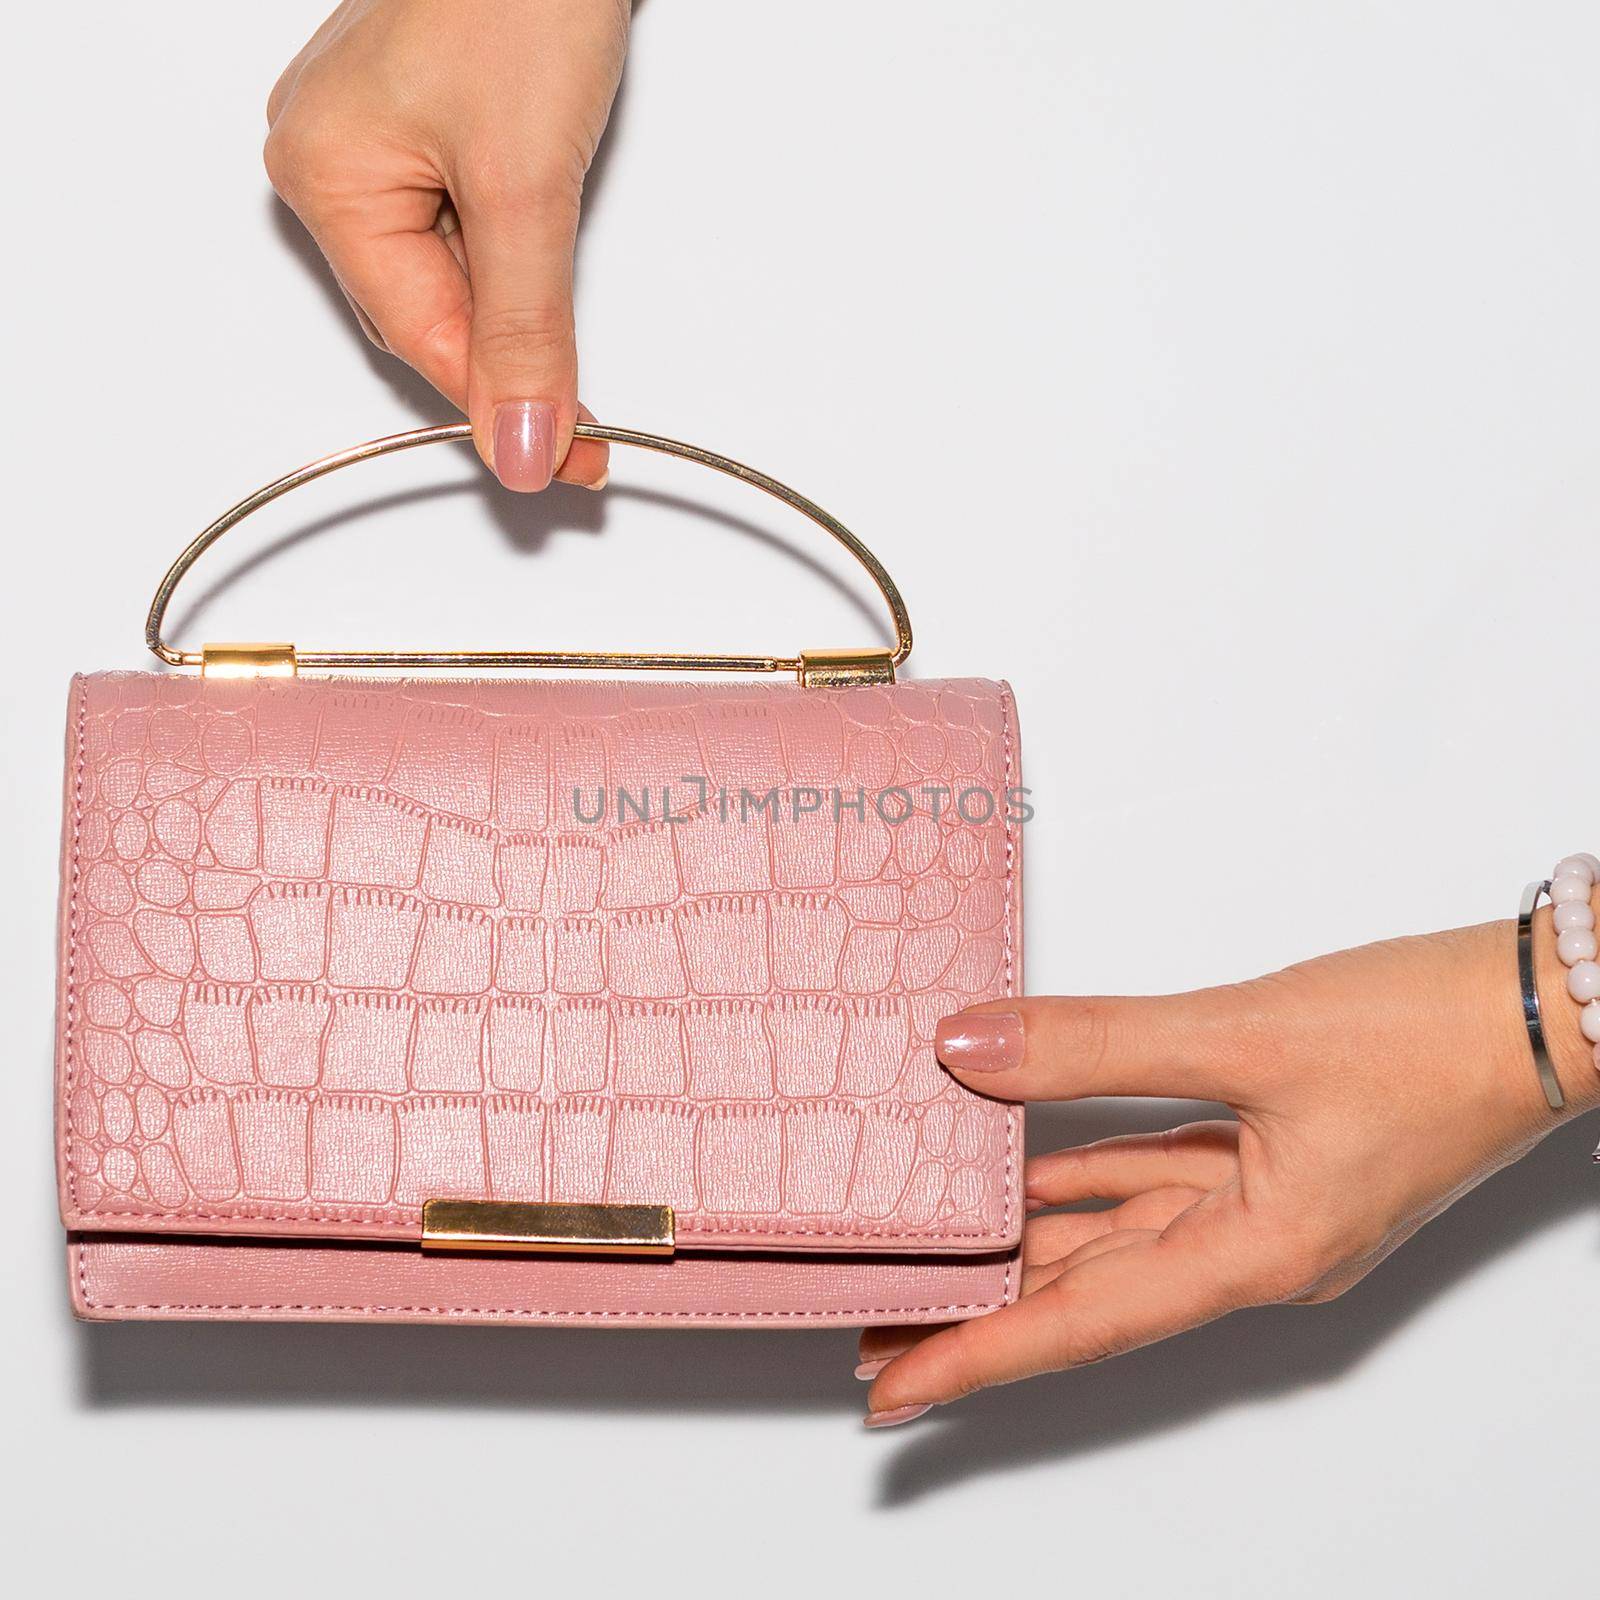 Woman holding pink leather handbag close-up